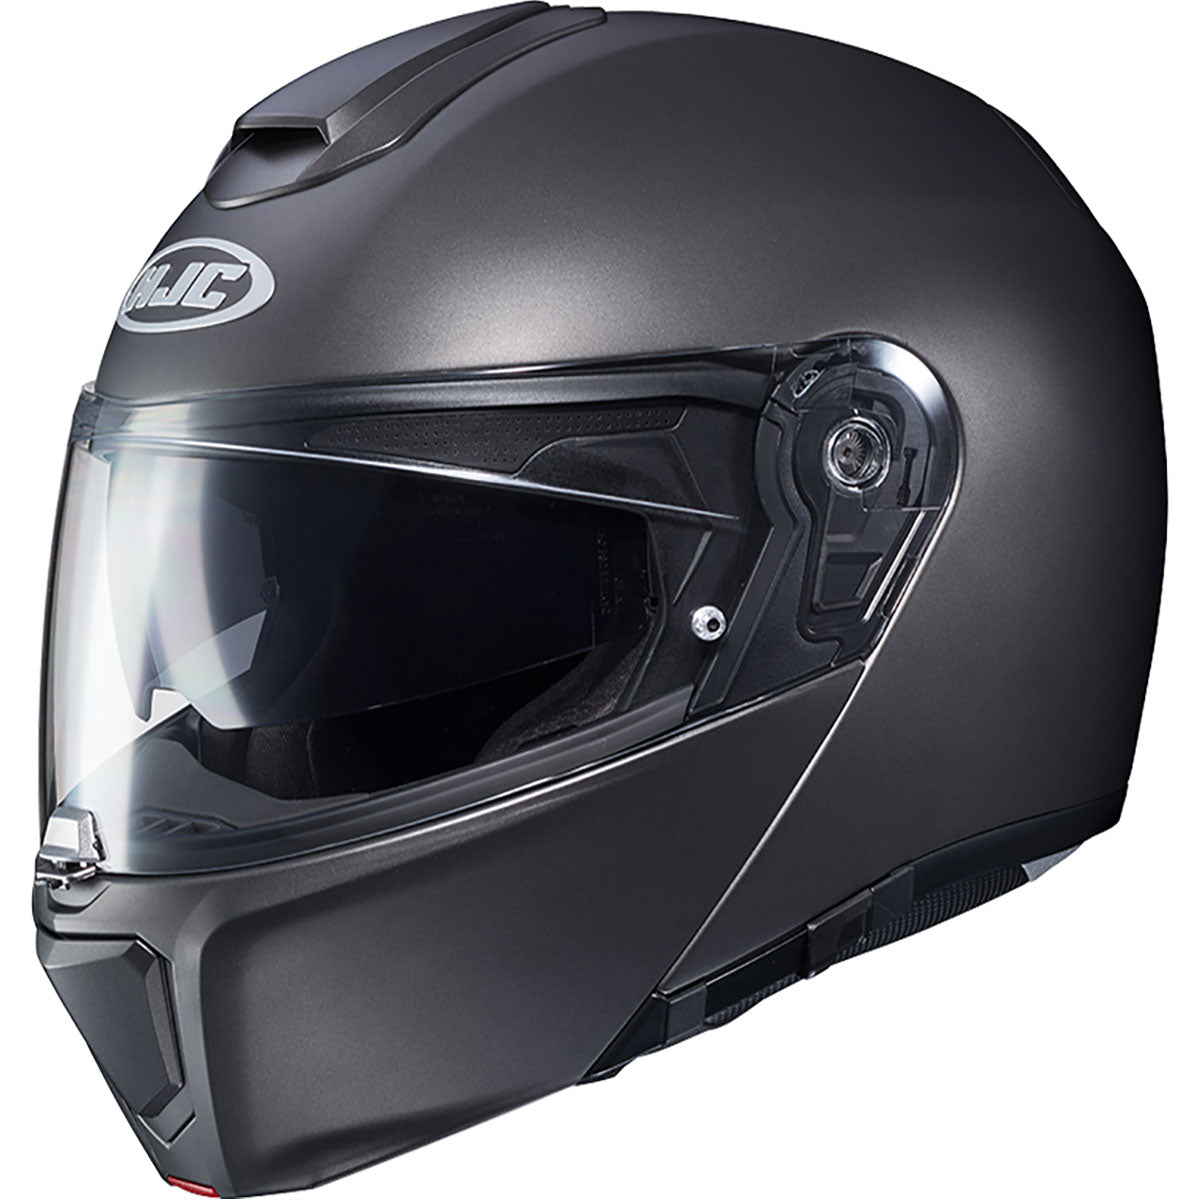 HJC Helmets 2018 | RPHA 90 Modular Street Helmets